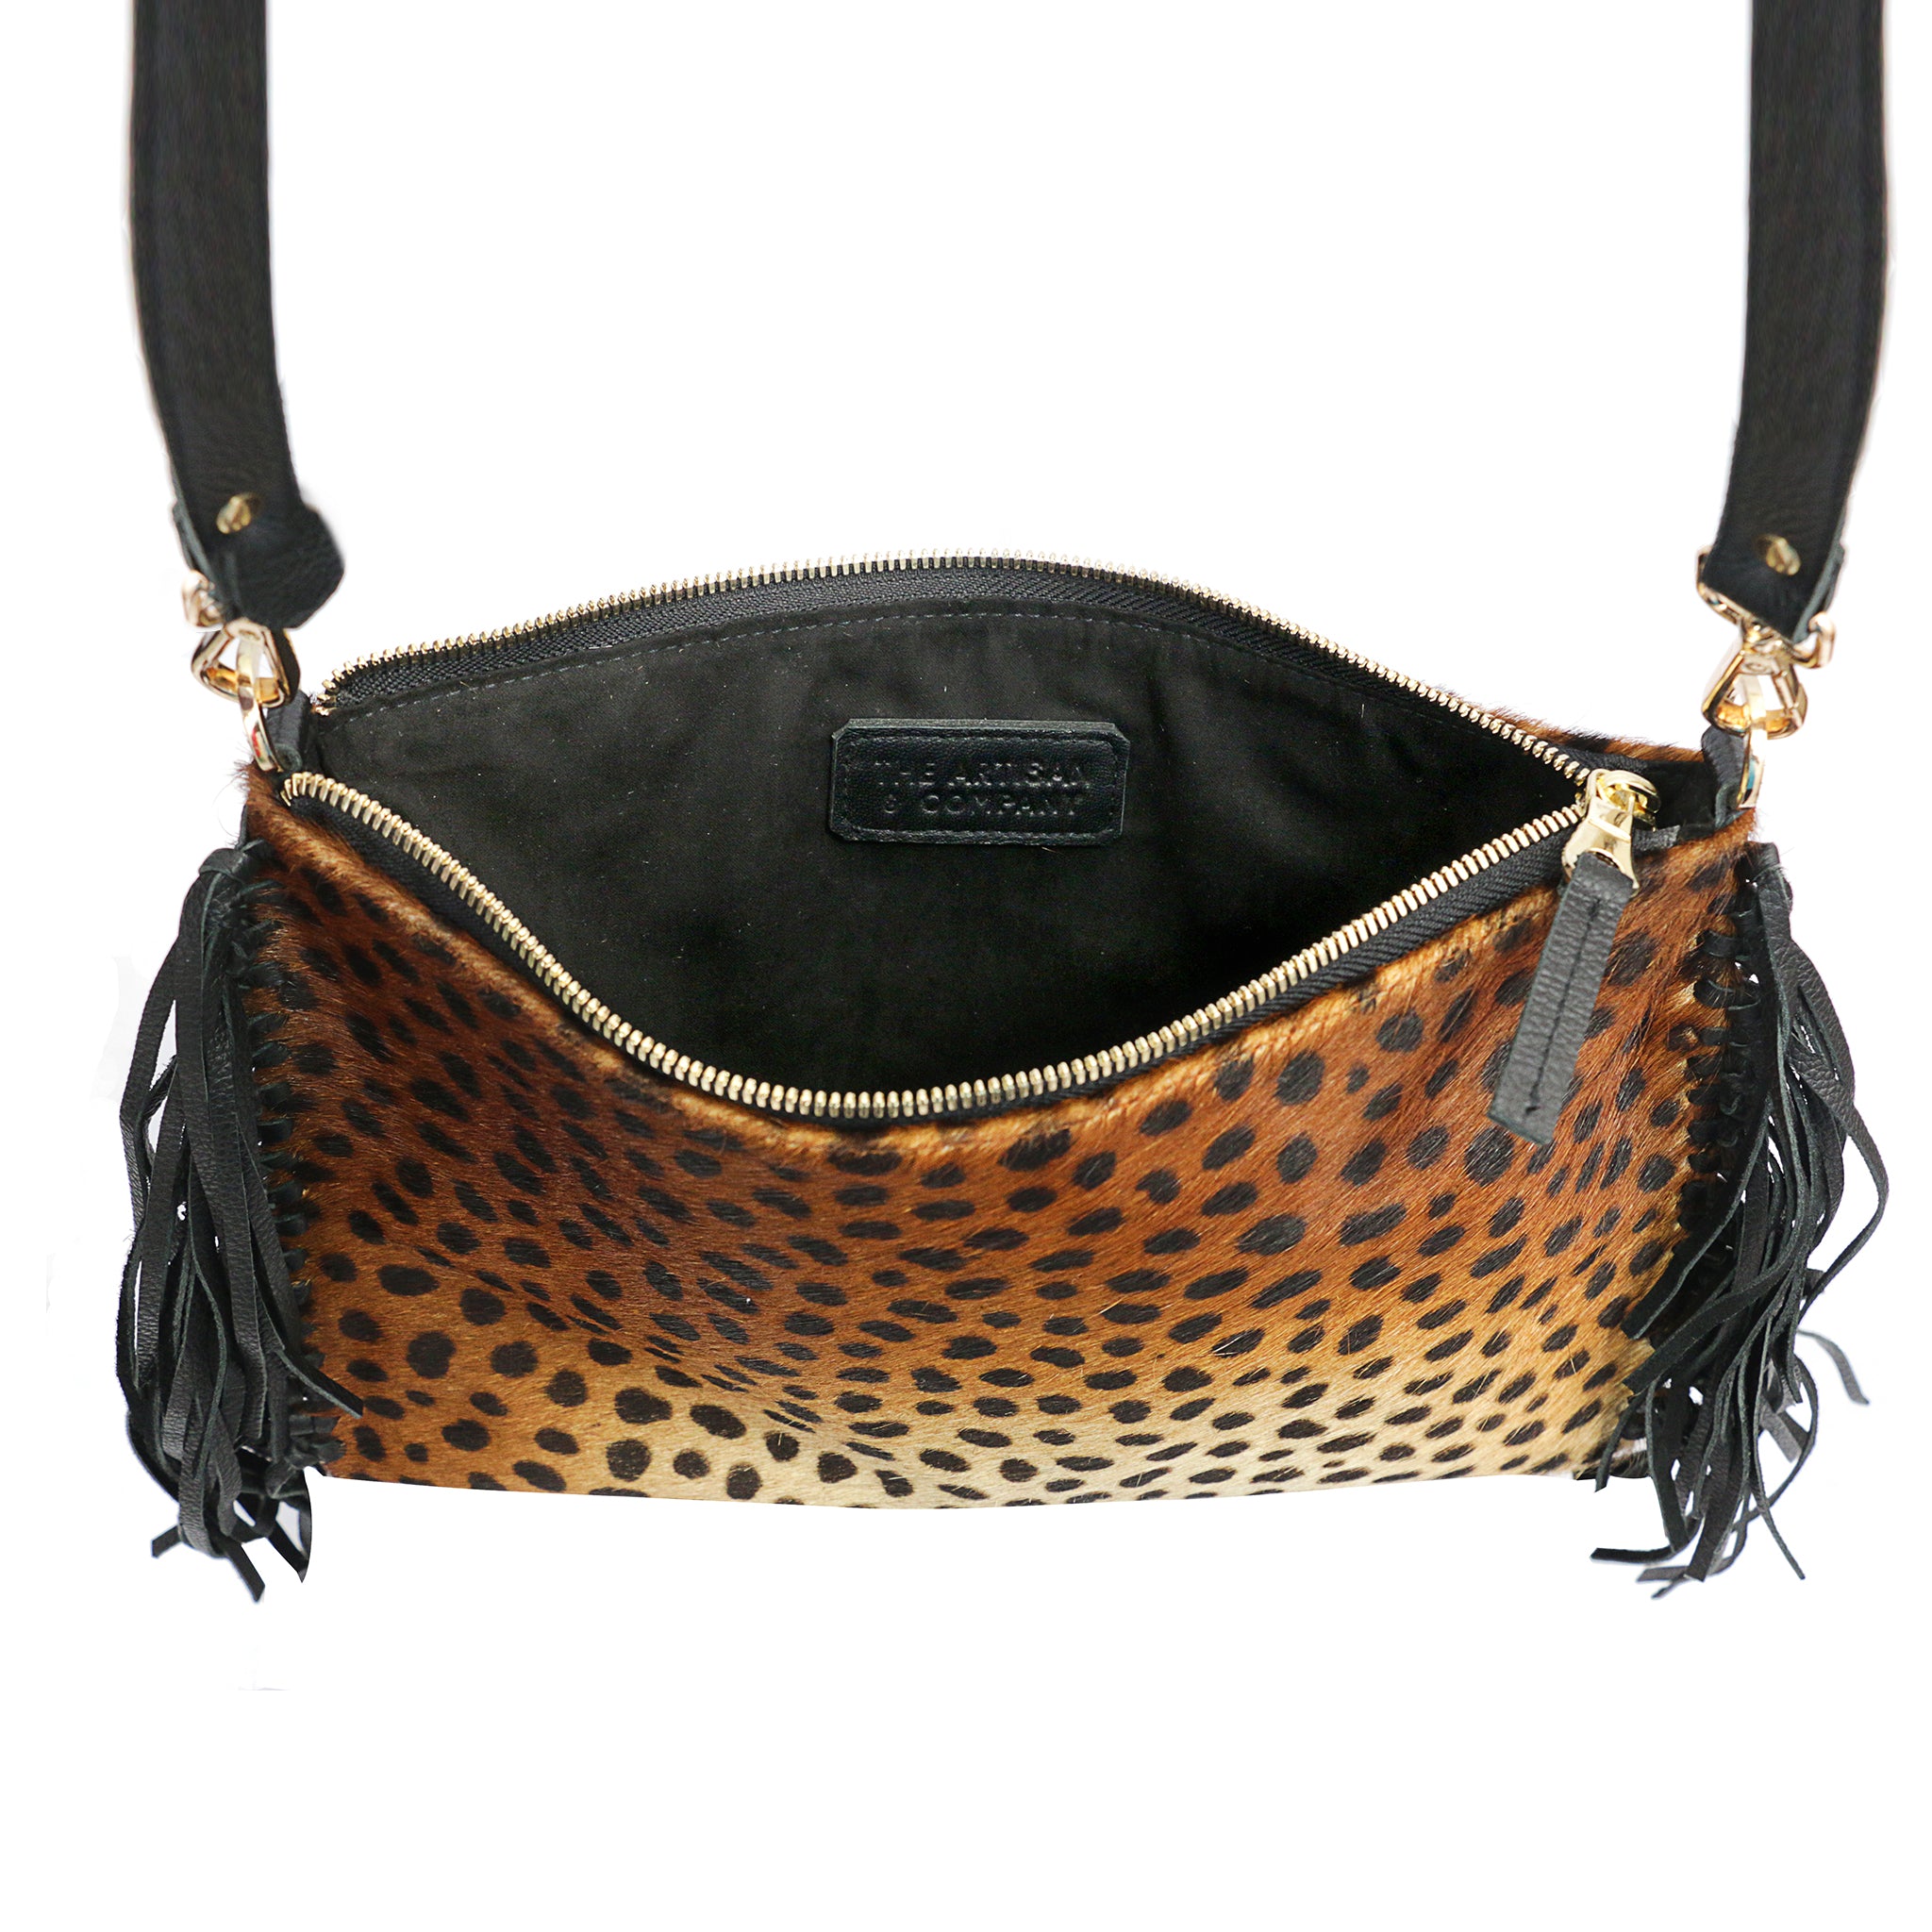 Interior View Leopard Leather Fringe Bag